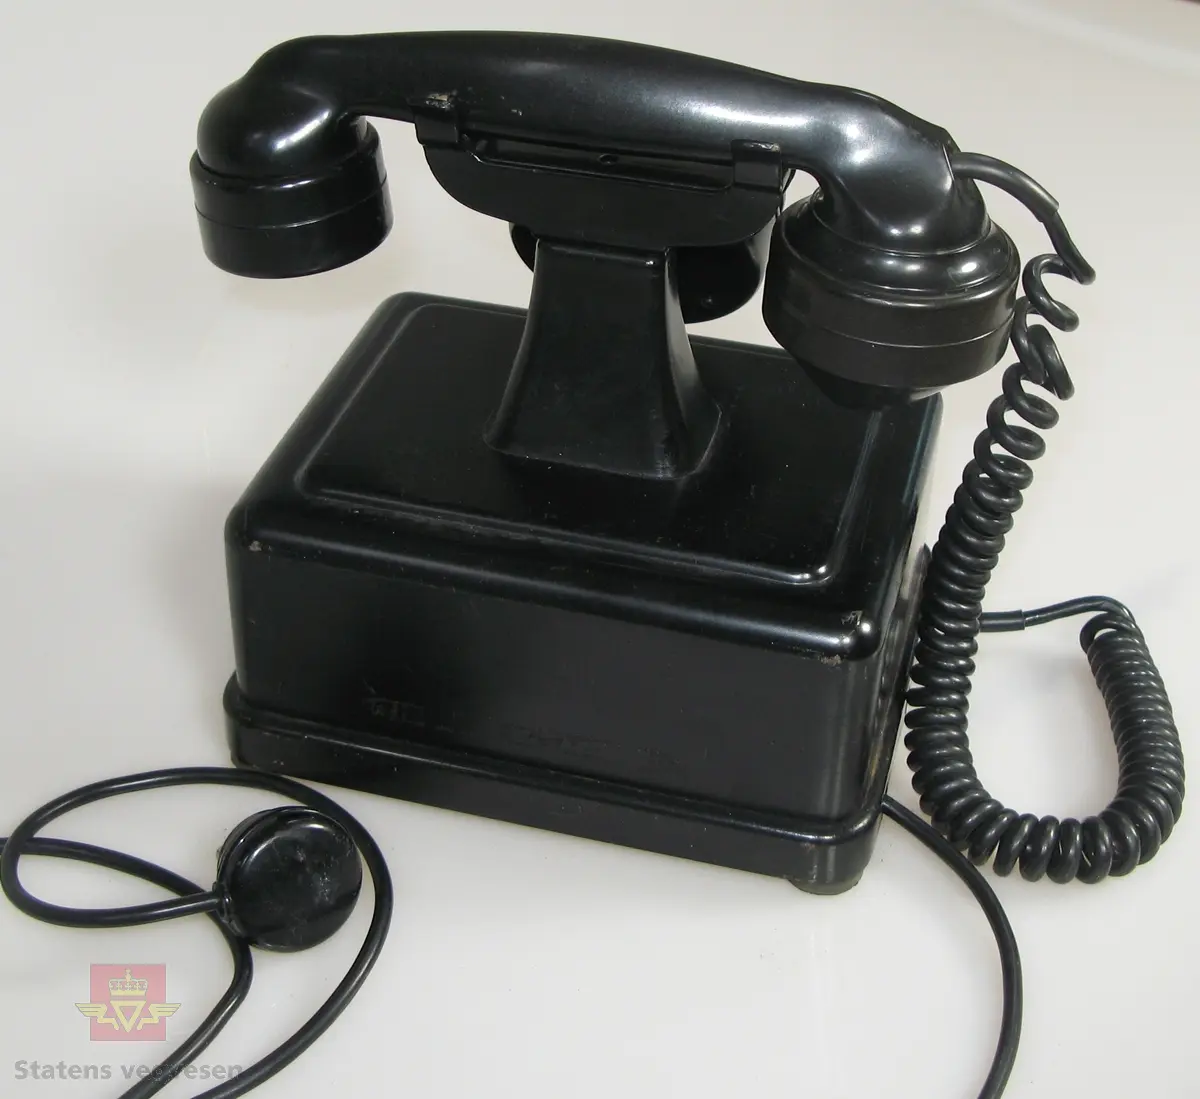 Svart telefonapparat. På fremsiden står det "Telegrafverket" sammen med logo. Apparatet har svart telefonledning med tre-polet kontakt.